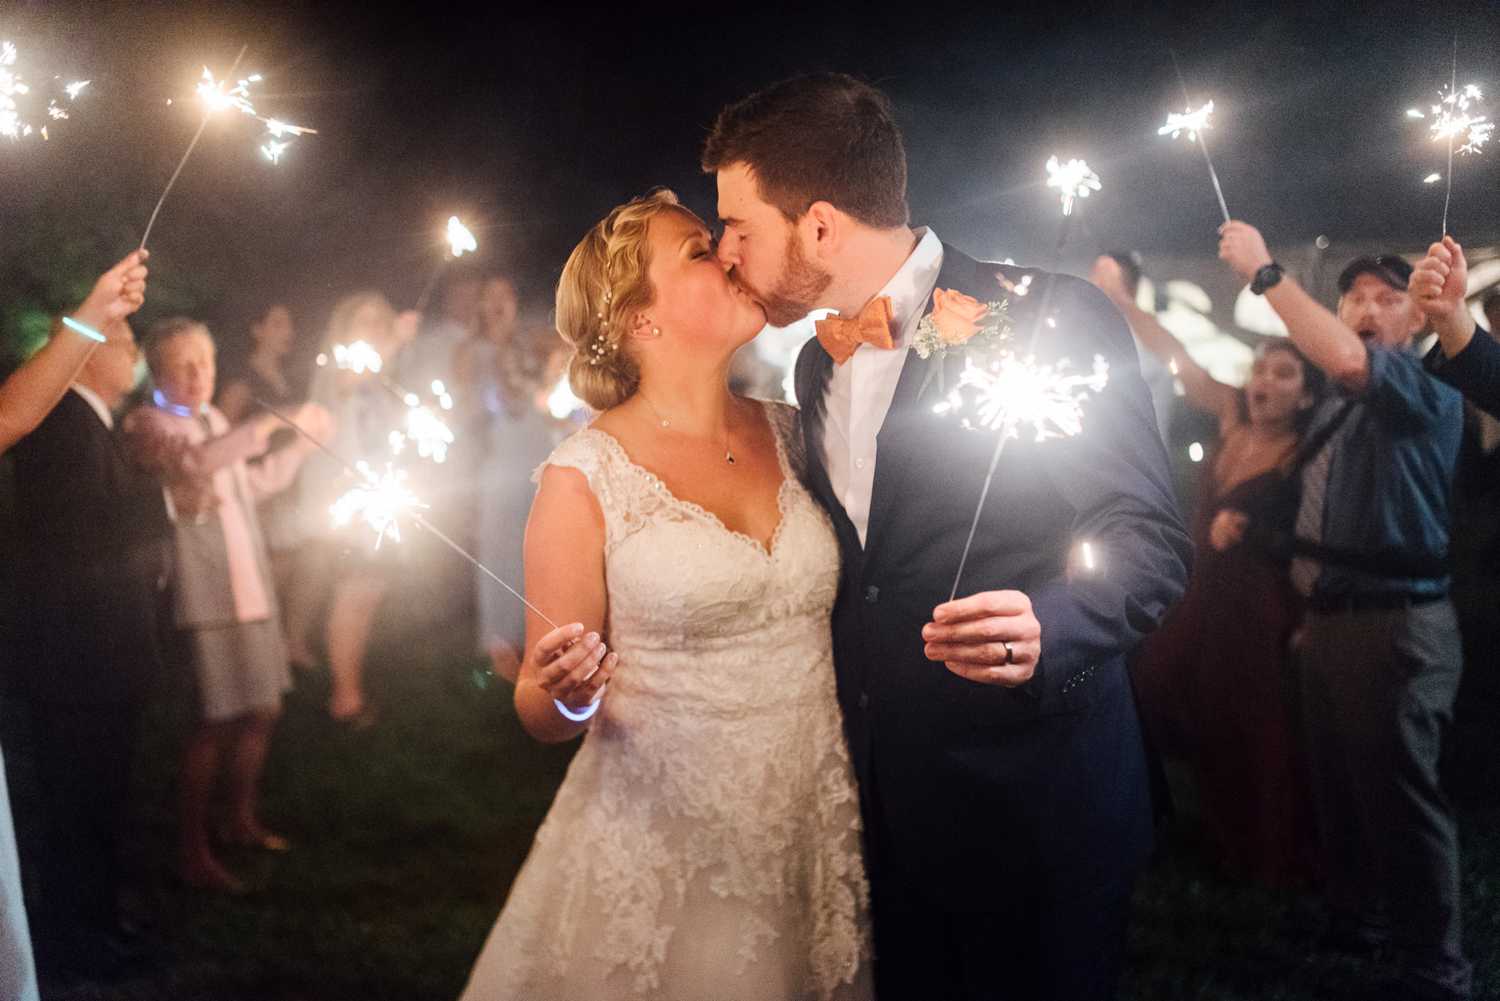 Cody + Stephanie - Stone Manor Country Club - Maryland Wedding Photographer - Alison Dunn Photography photo